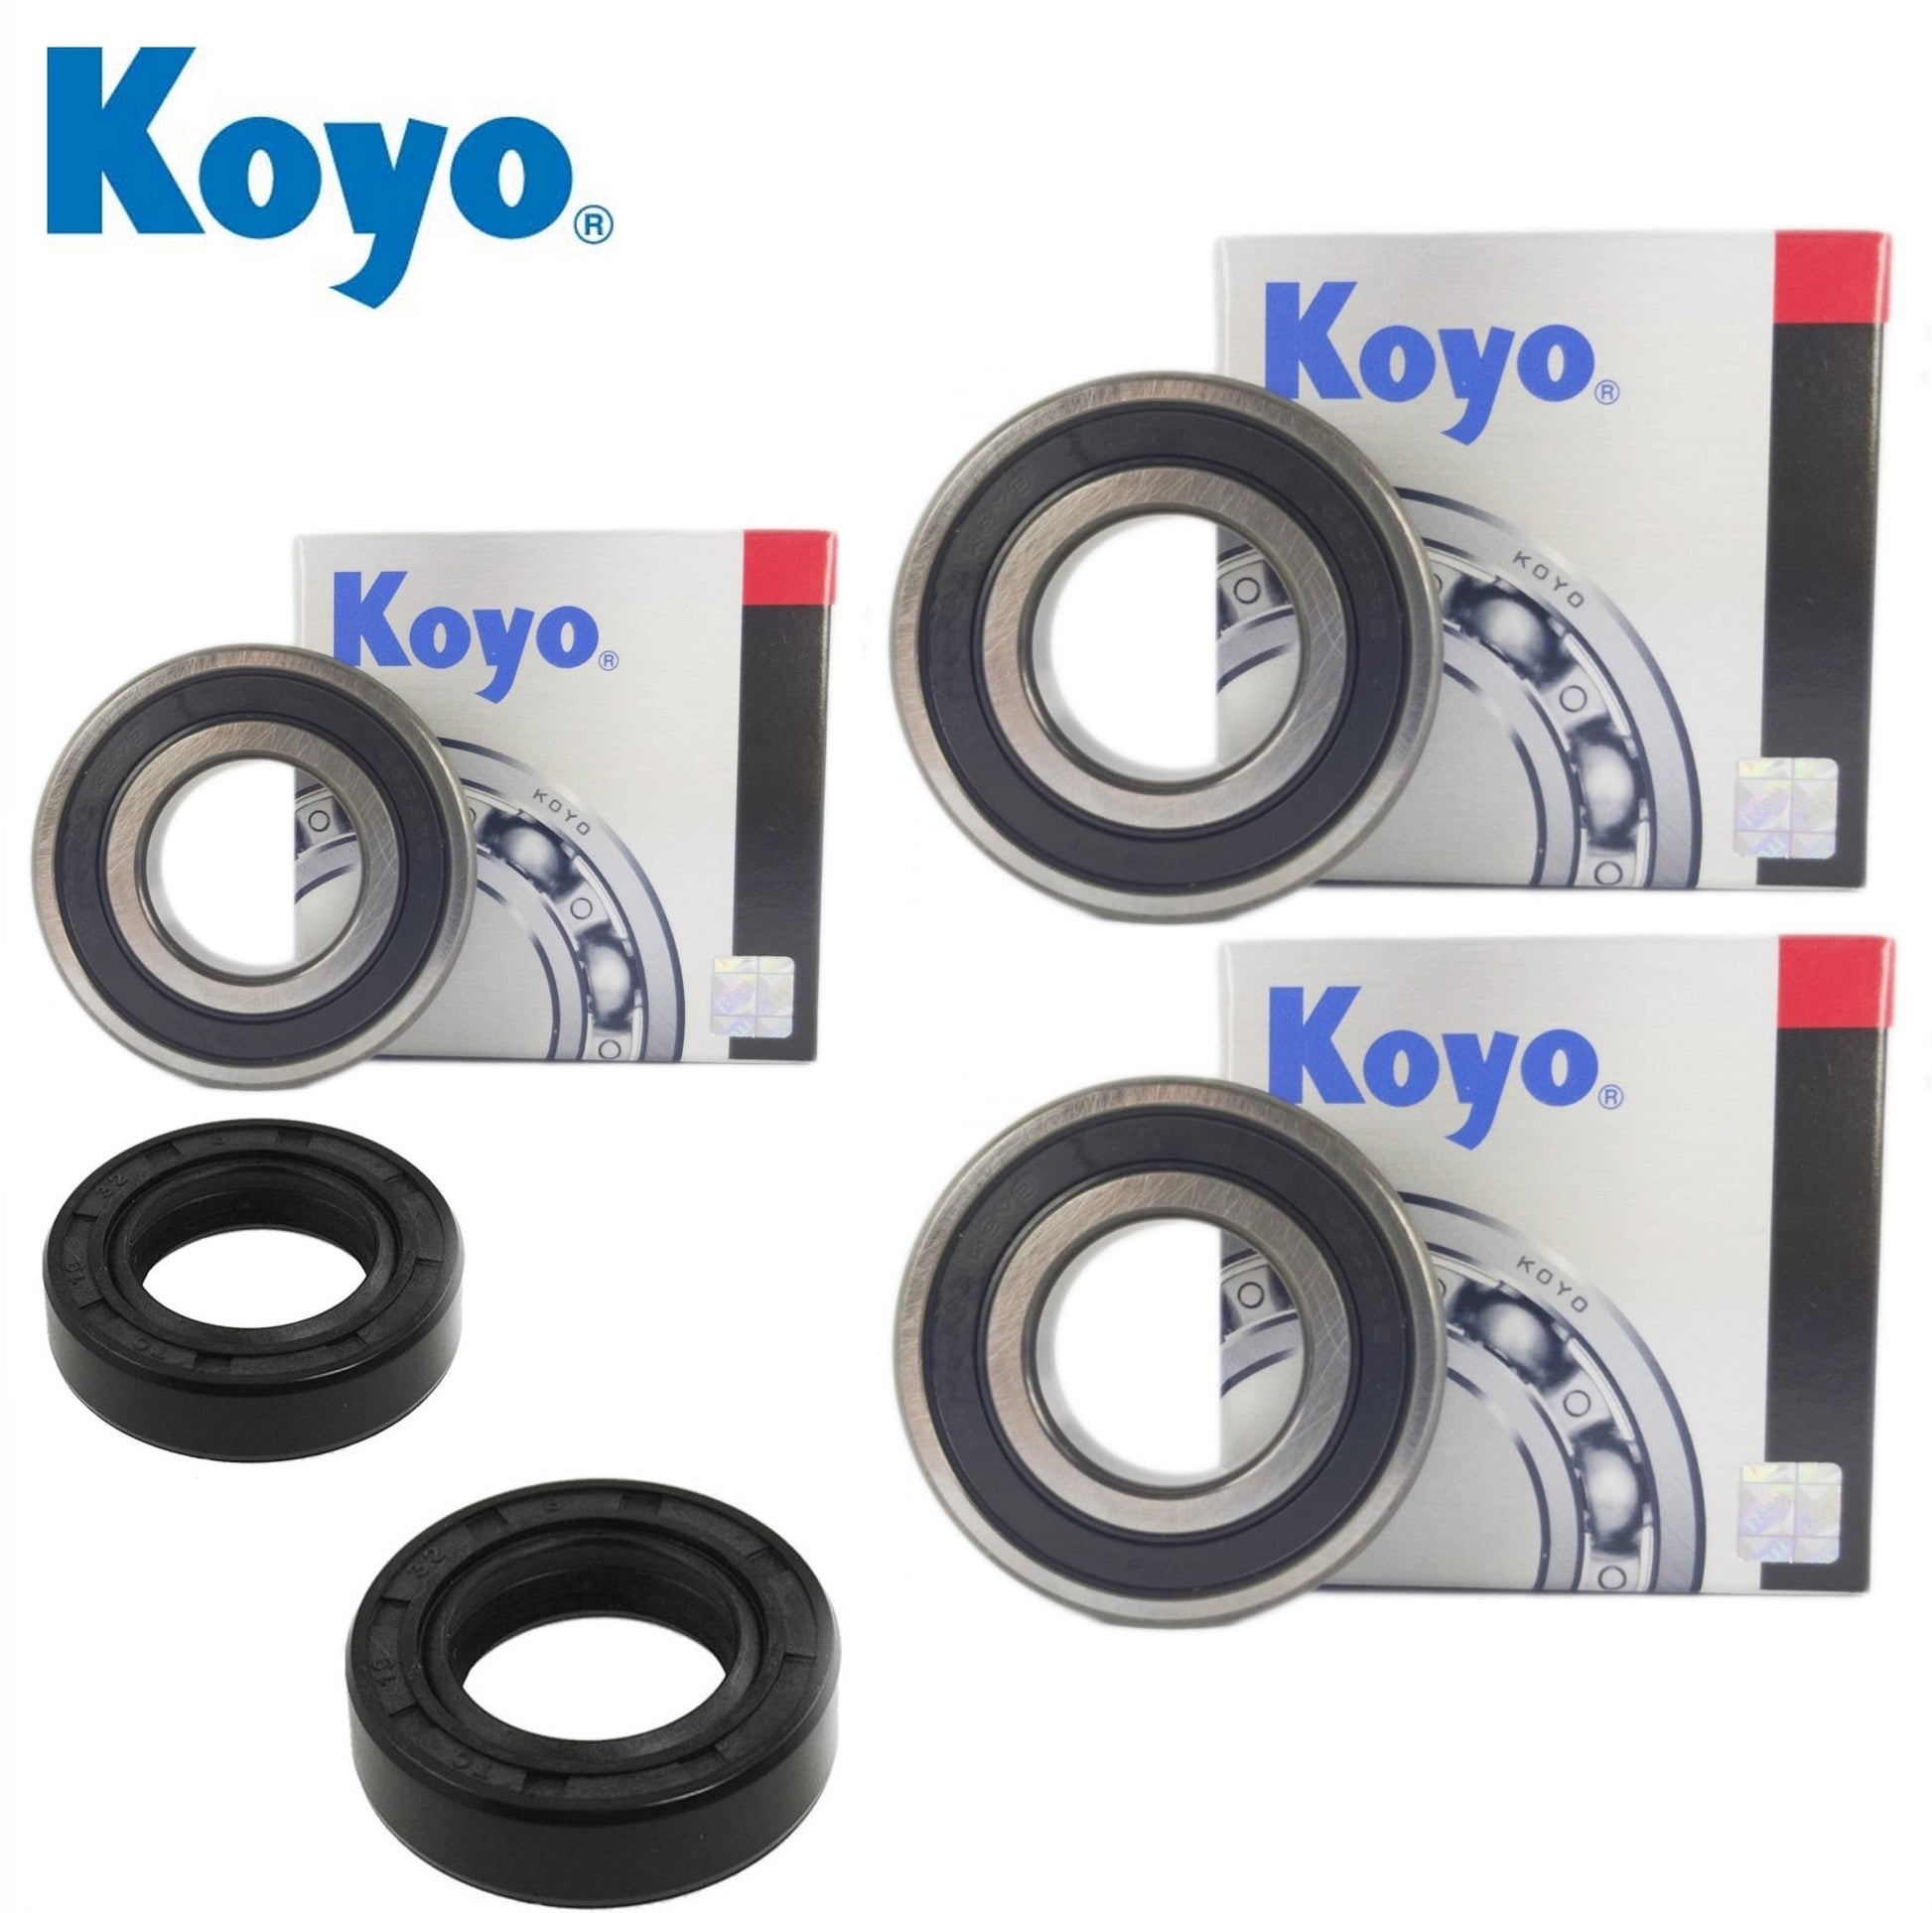 Yamaha MT09 1RC2 Rear Wheel Bearing Kit with Koyo bearings